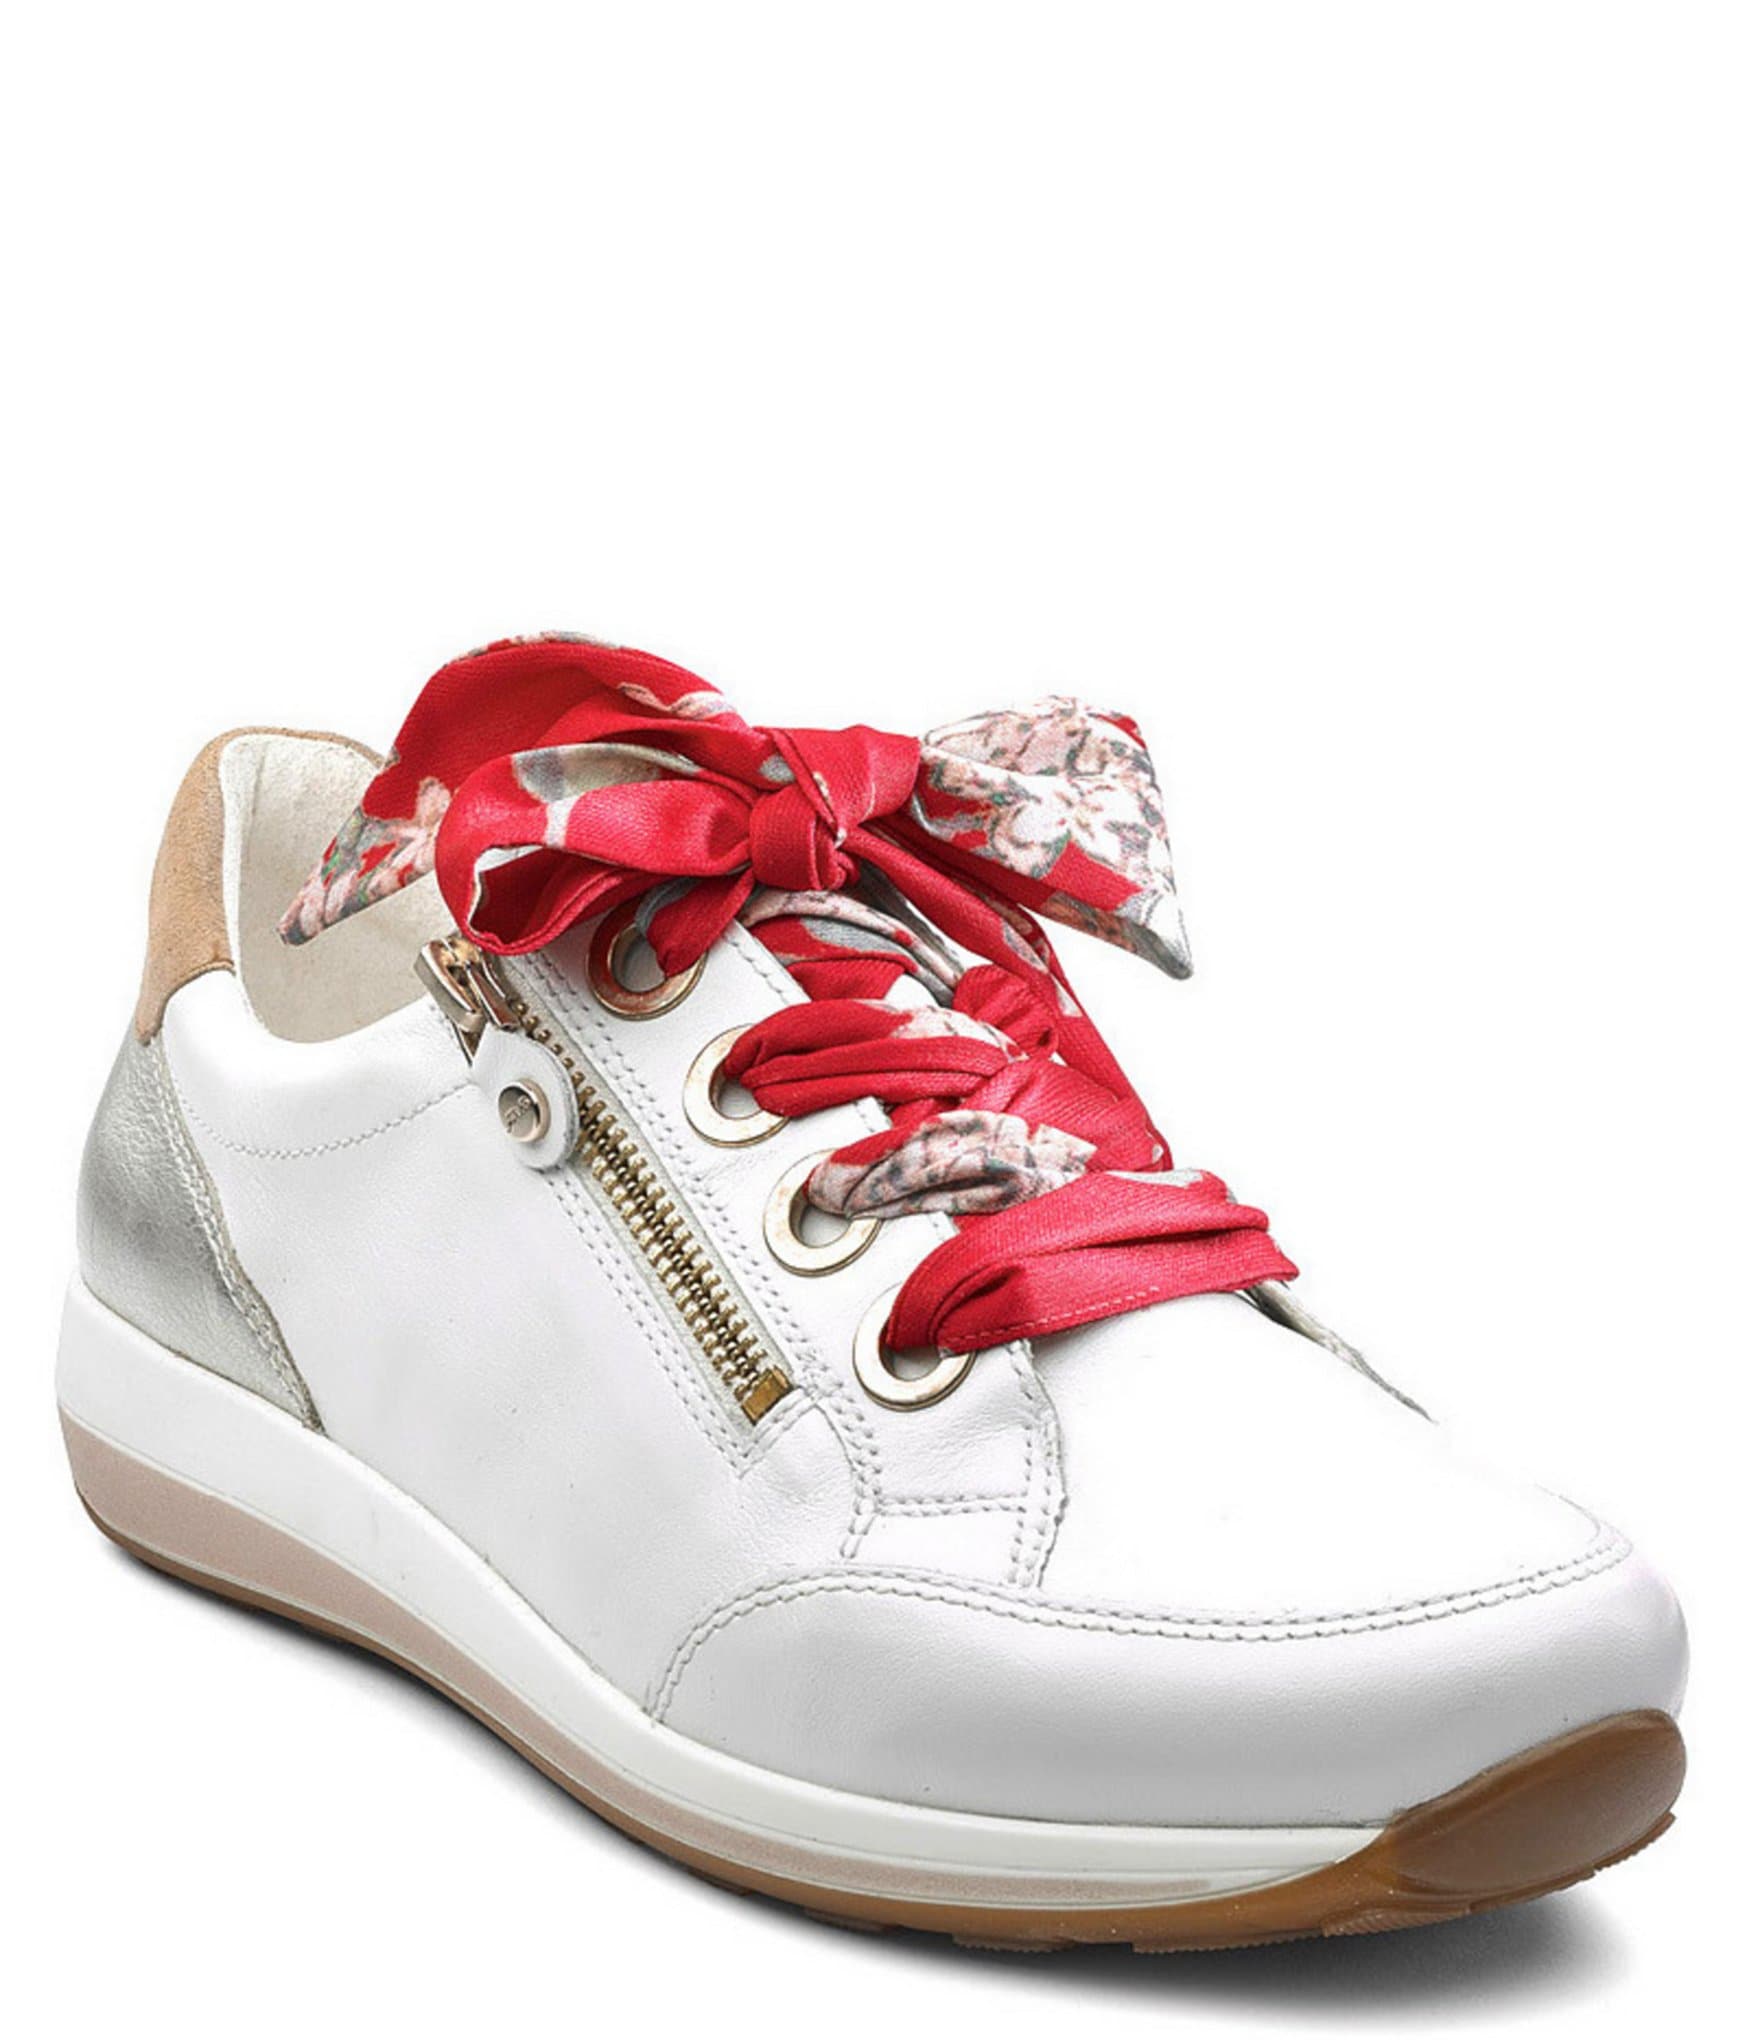 Doorbraak radar Wortel ara Ollie Leather and Suede Zip Sneakers | Dillard's